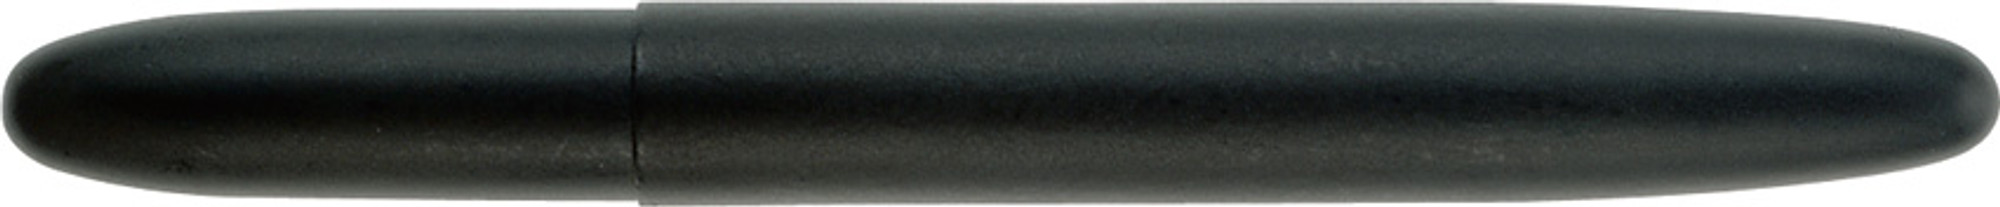 Fisher Space Pen Bullet Black